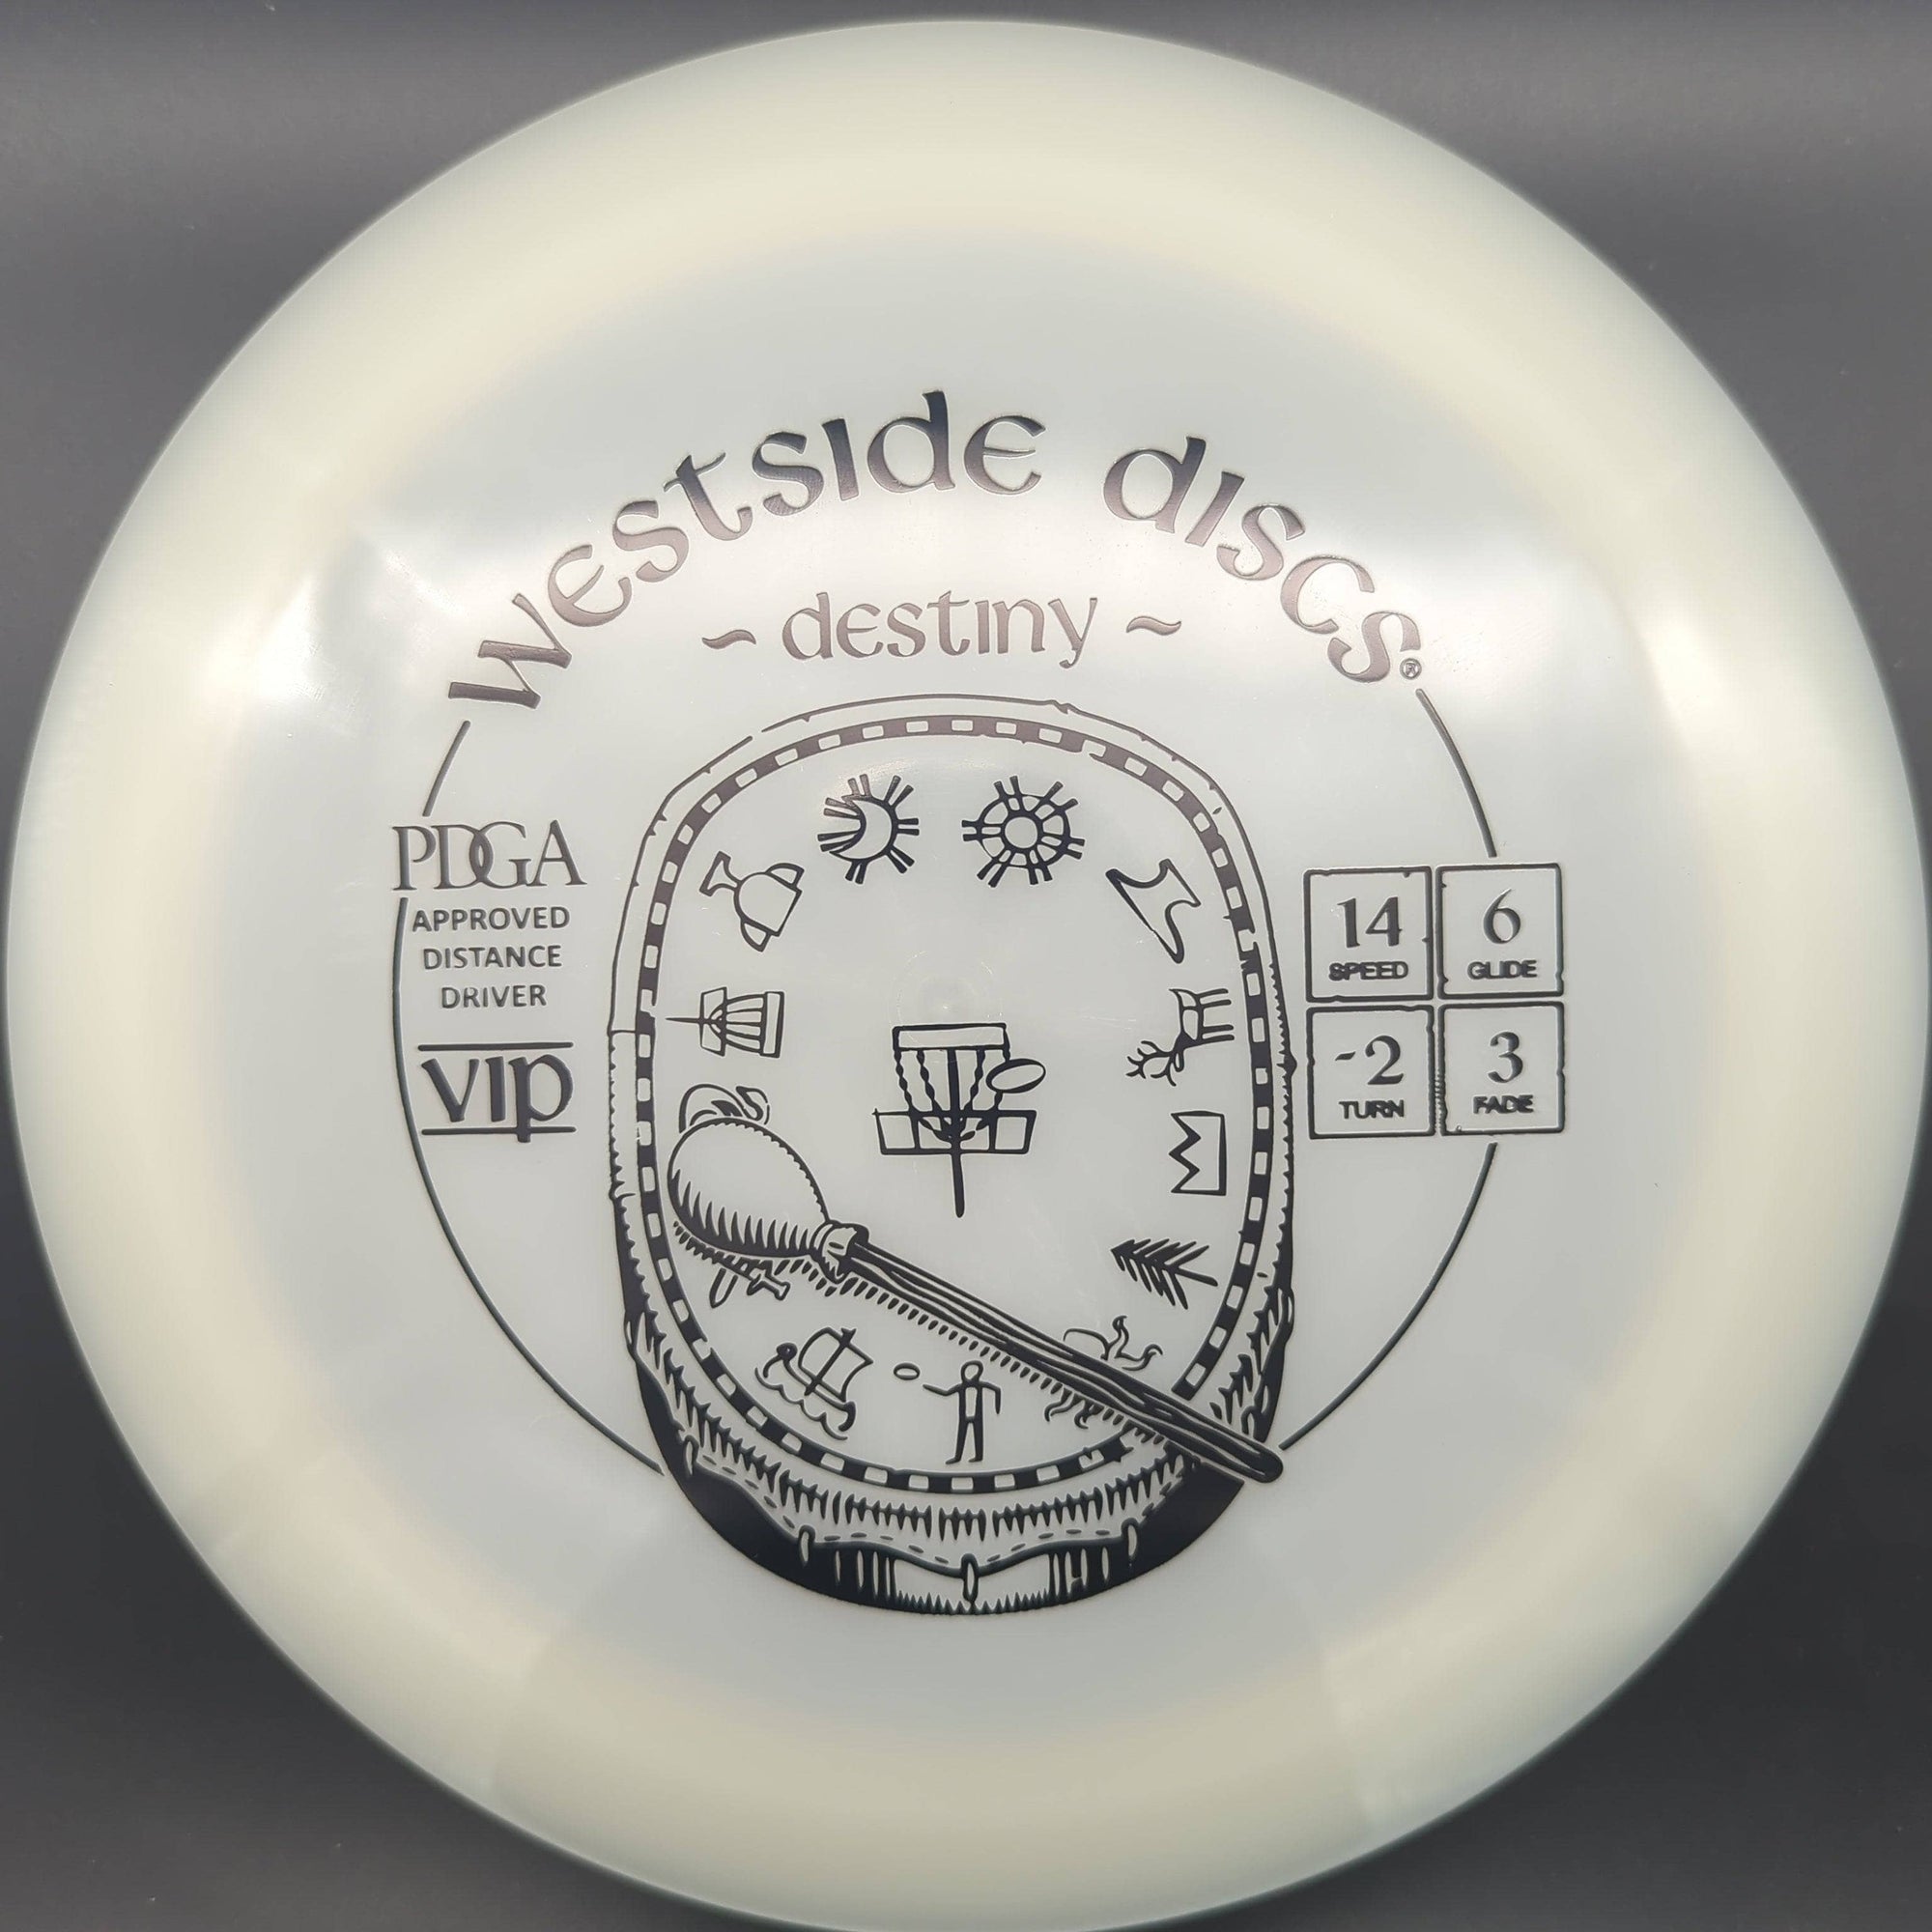 Westside Discs Distance Driver Destiny, VIP